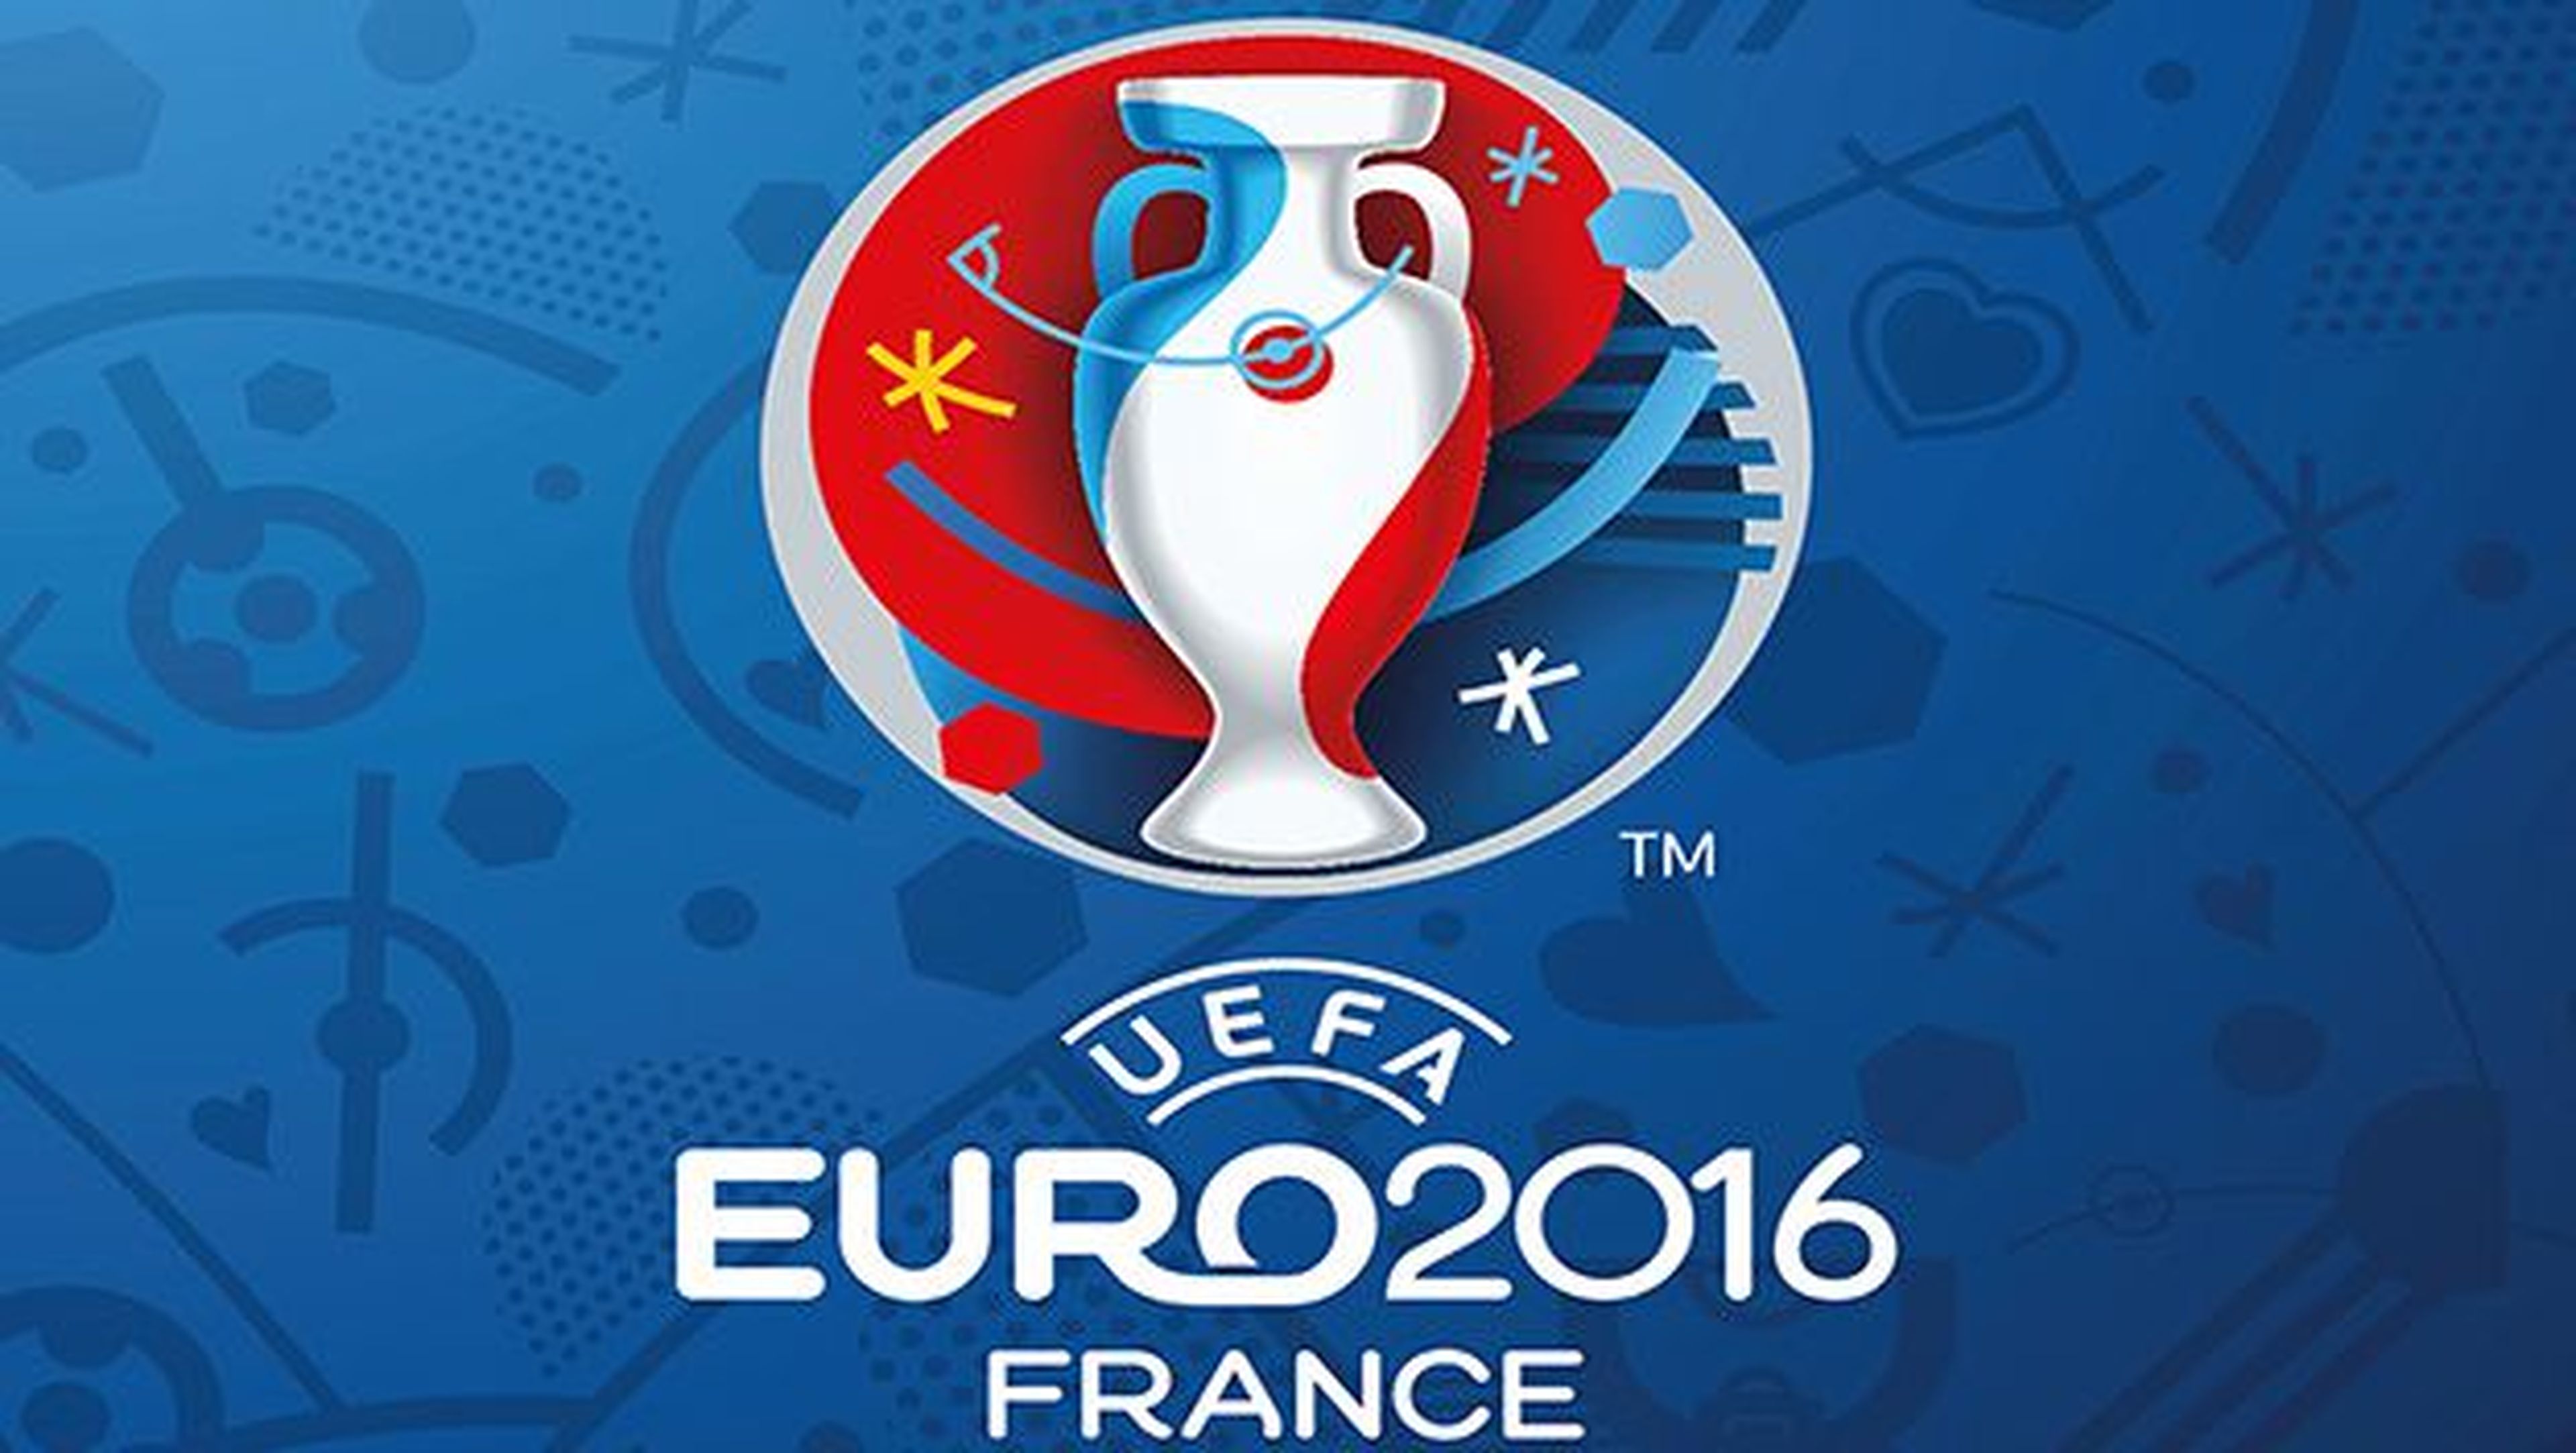 prediccion campeon eurocopa 2016